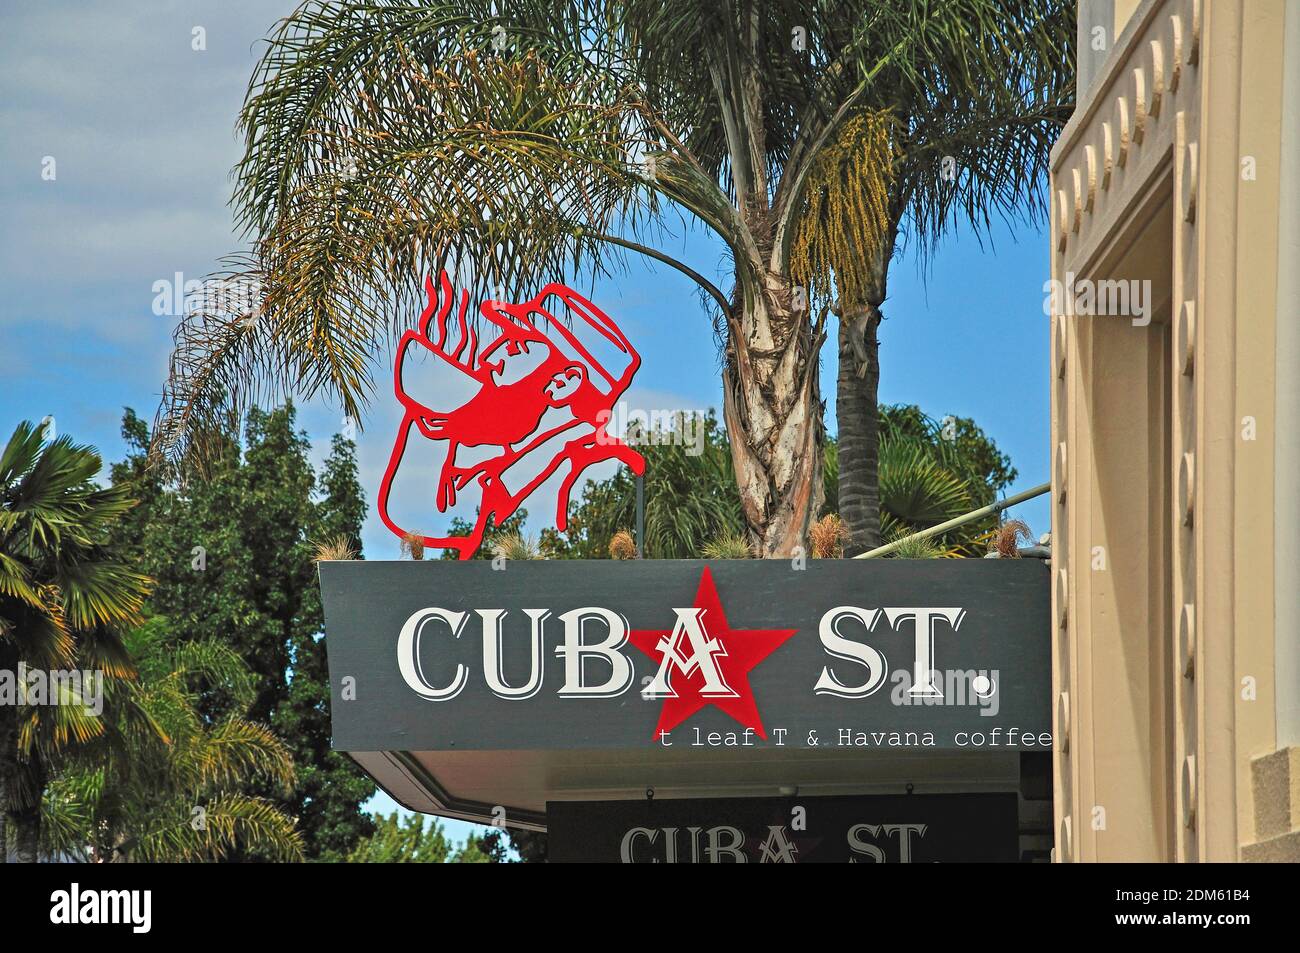 Cuba Street Cafe, Cuba Street, Napier, Hawke's Bay, North Island, New Zealand Stock Photo